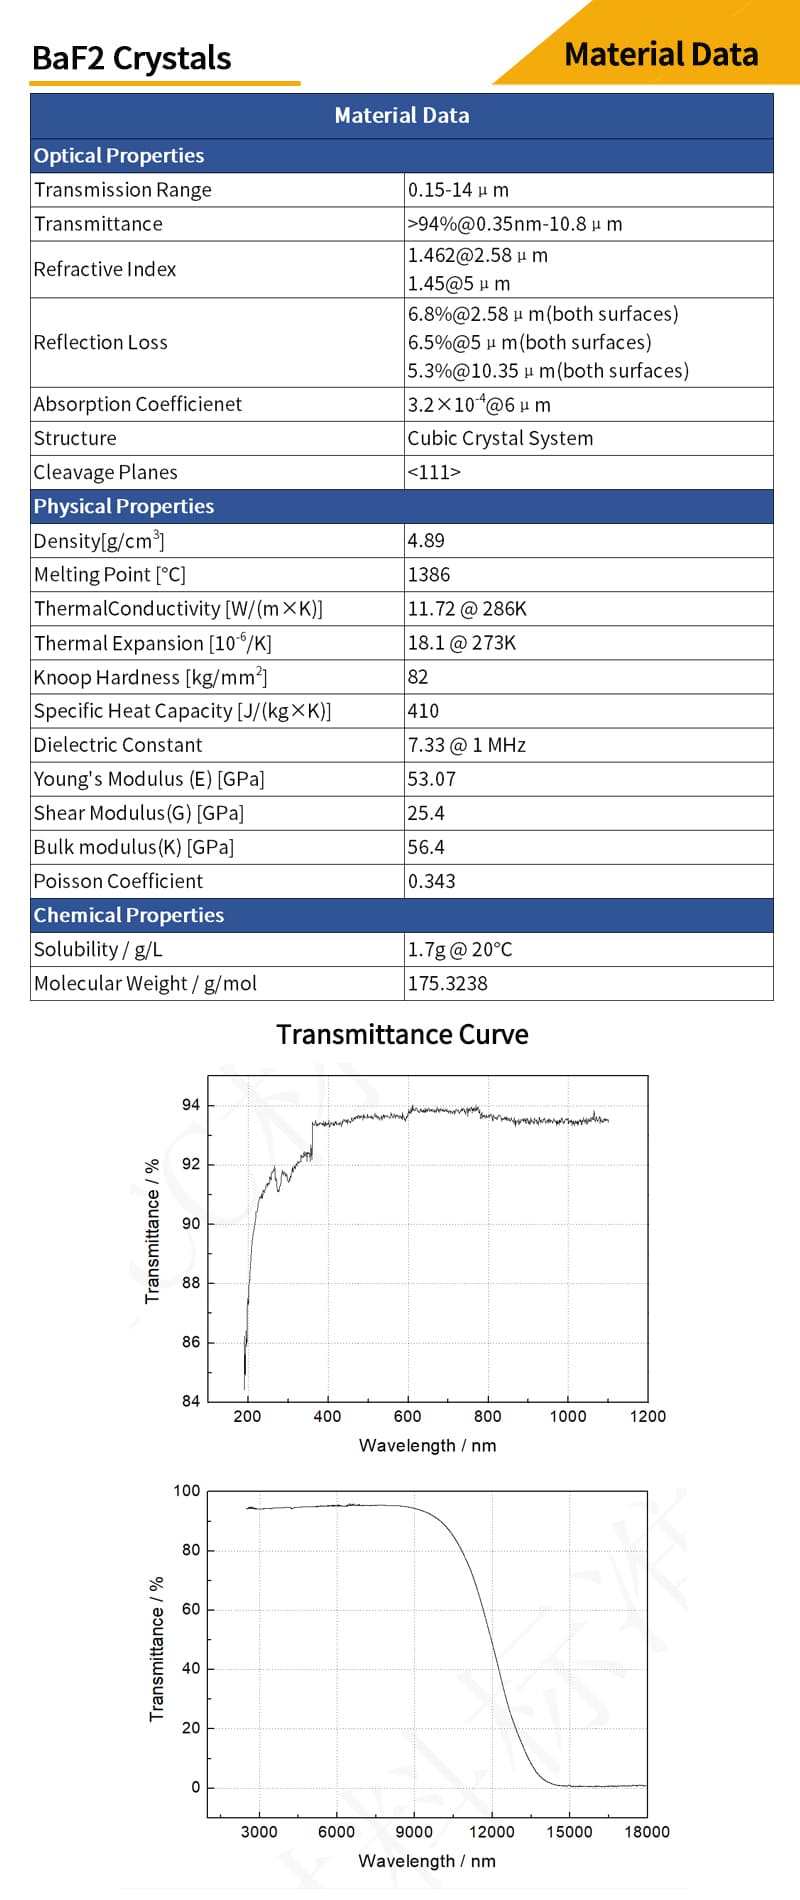 Barium Fluoride plano-convex lenses material data and transmittance curves